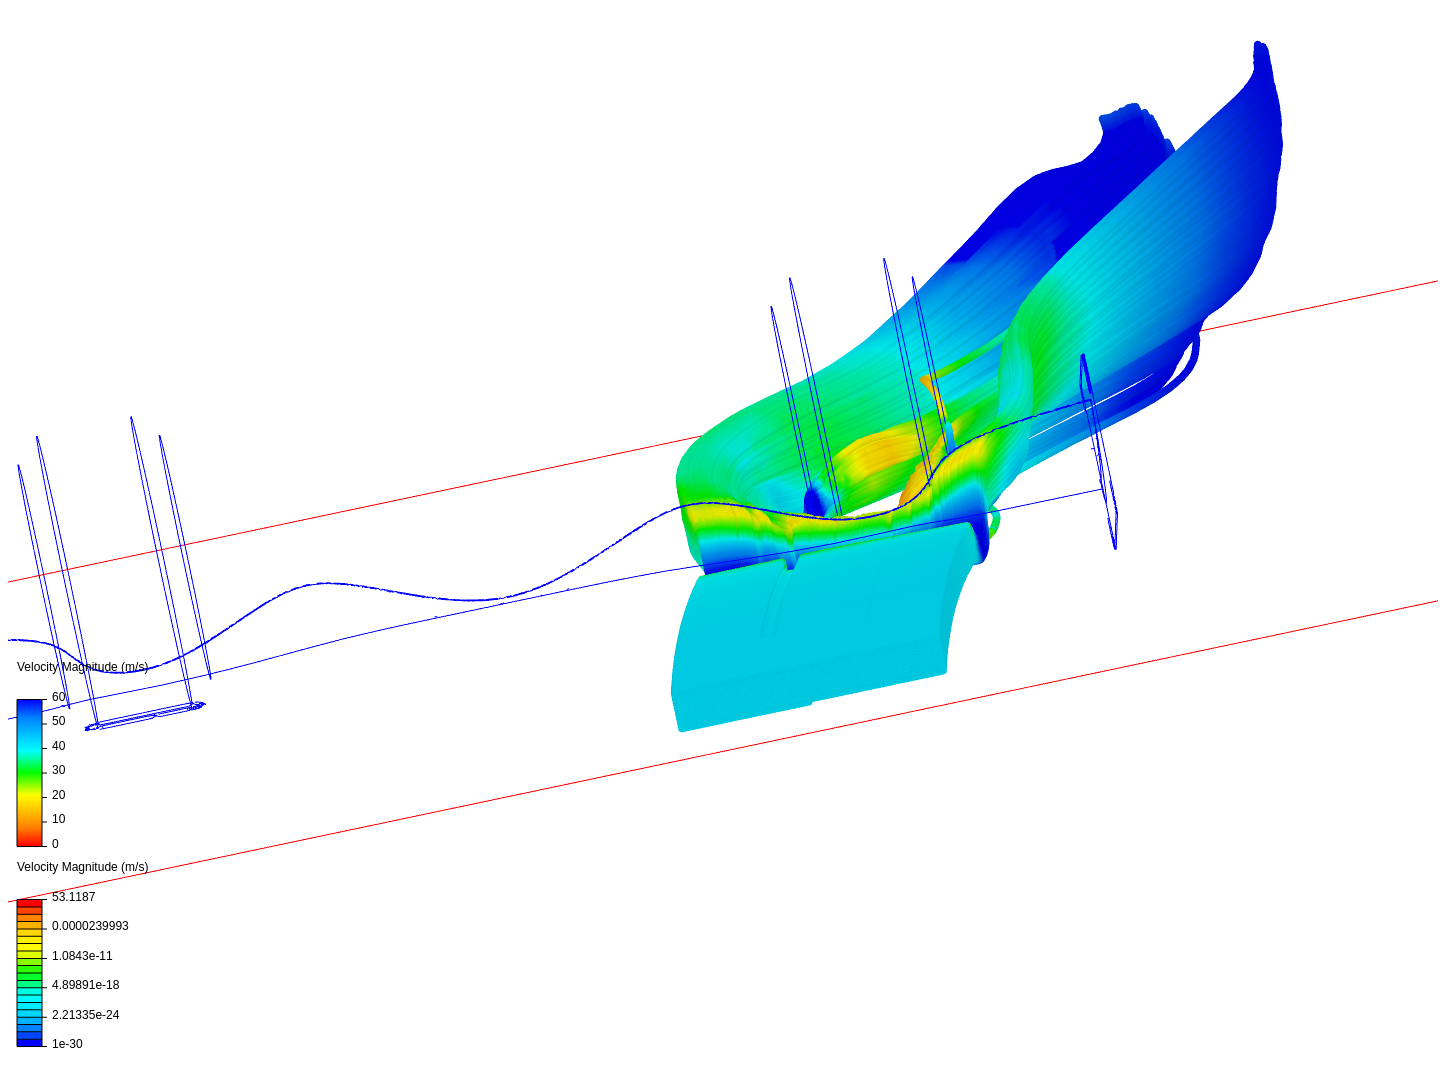 V2 directional turning flow image